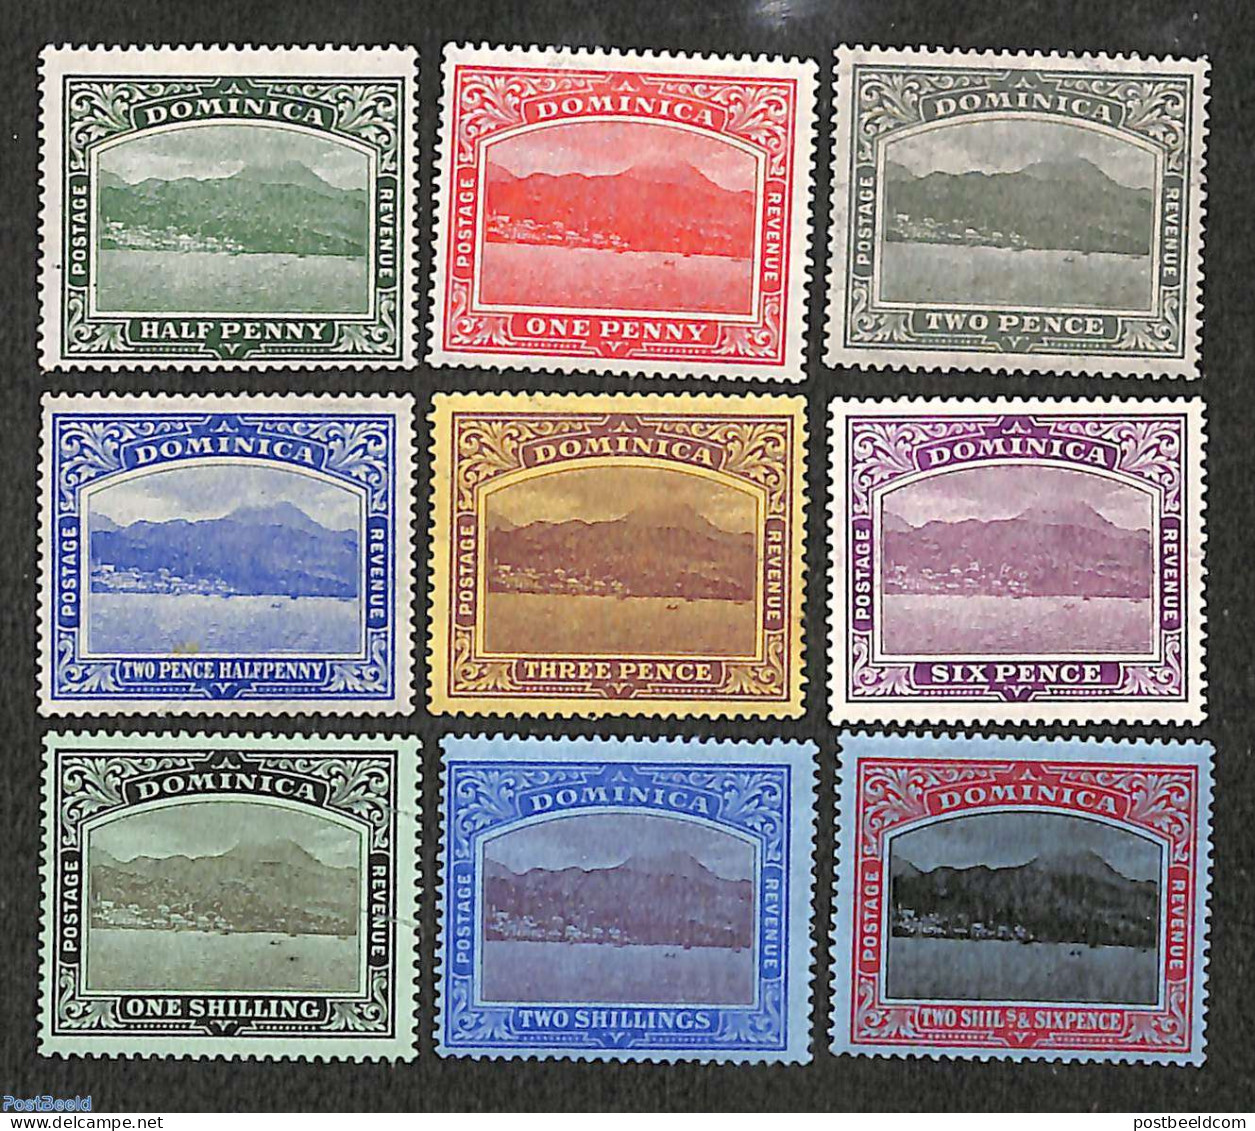 Dominica 1908 Definitives 9v, Unused (hinged) - Dominicaine (République)